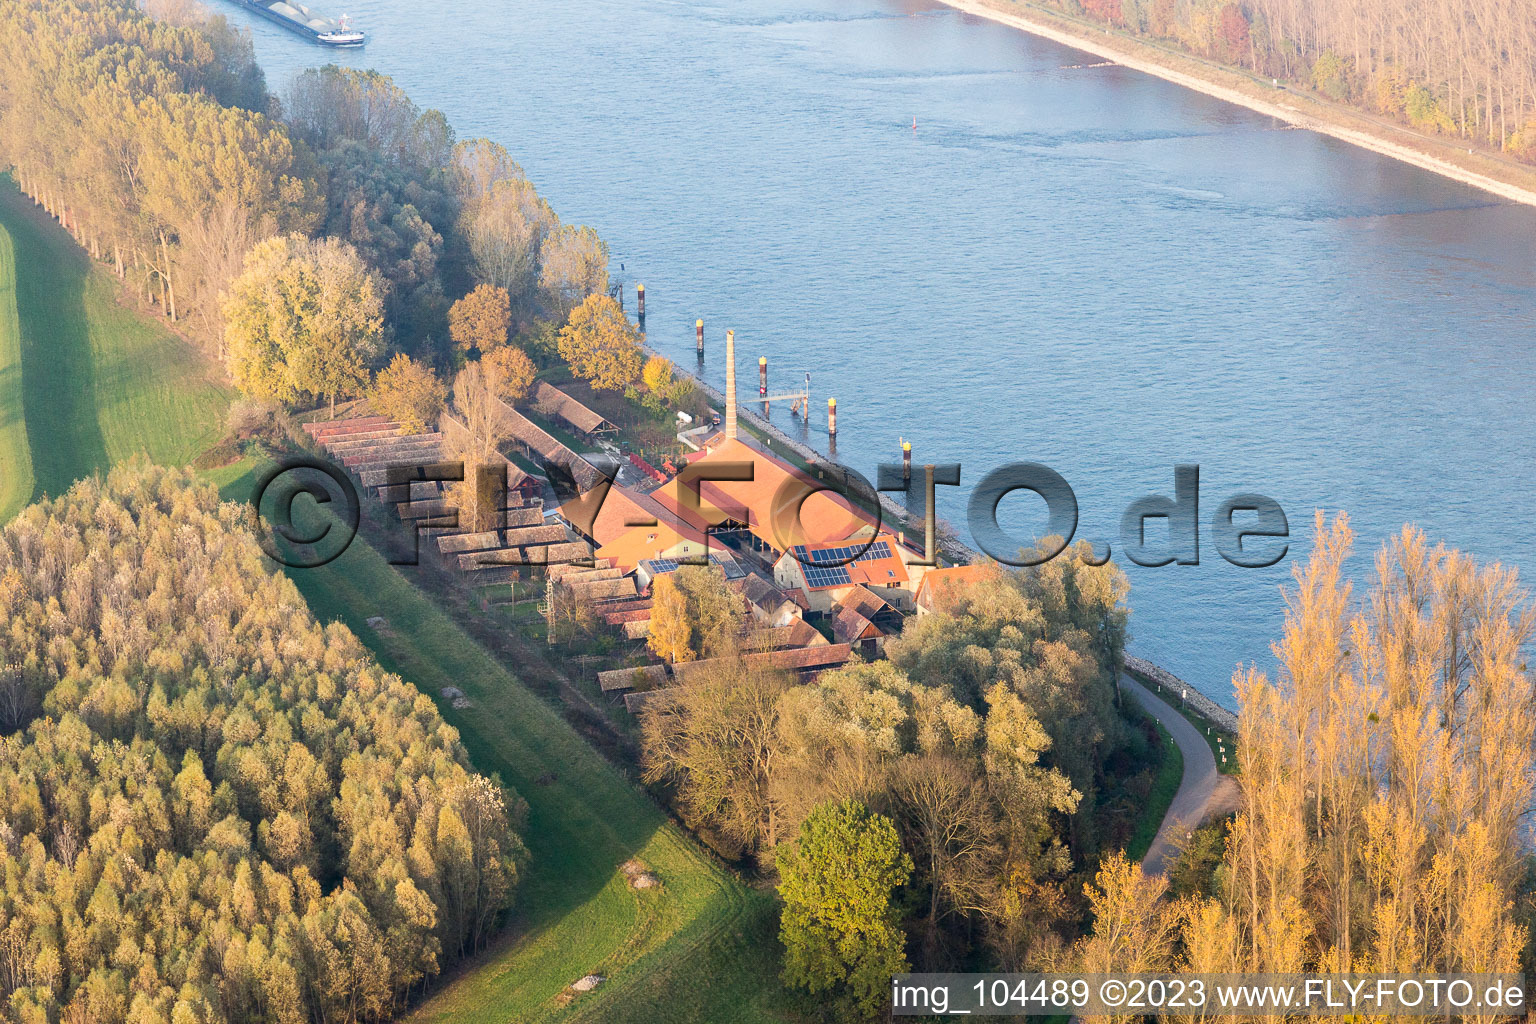 Drone image of District Sondernheim in Germersheim in the state Rhineland-Palatinate, Germany